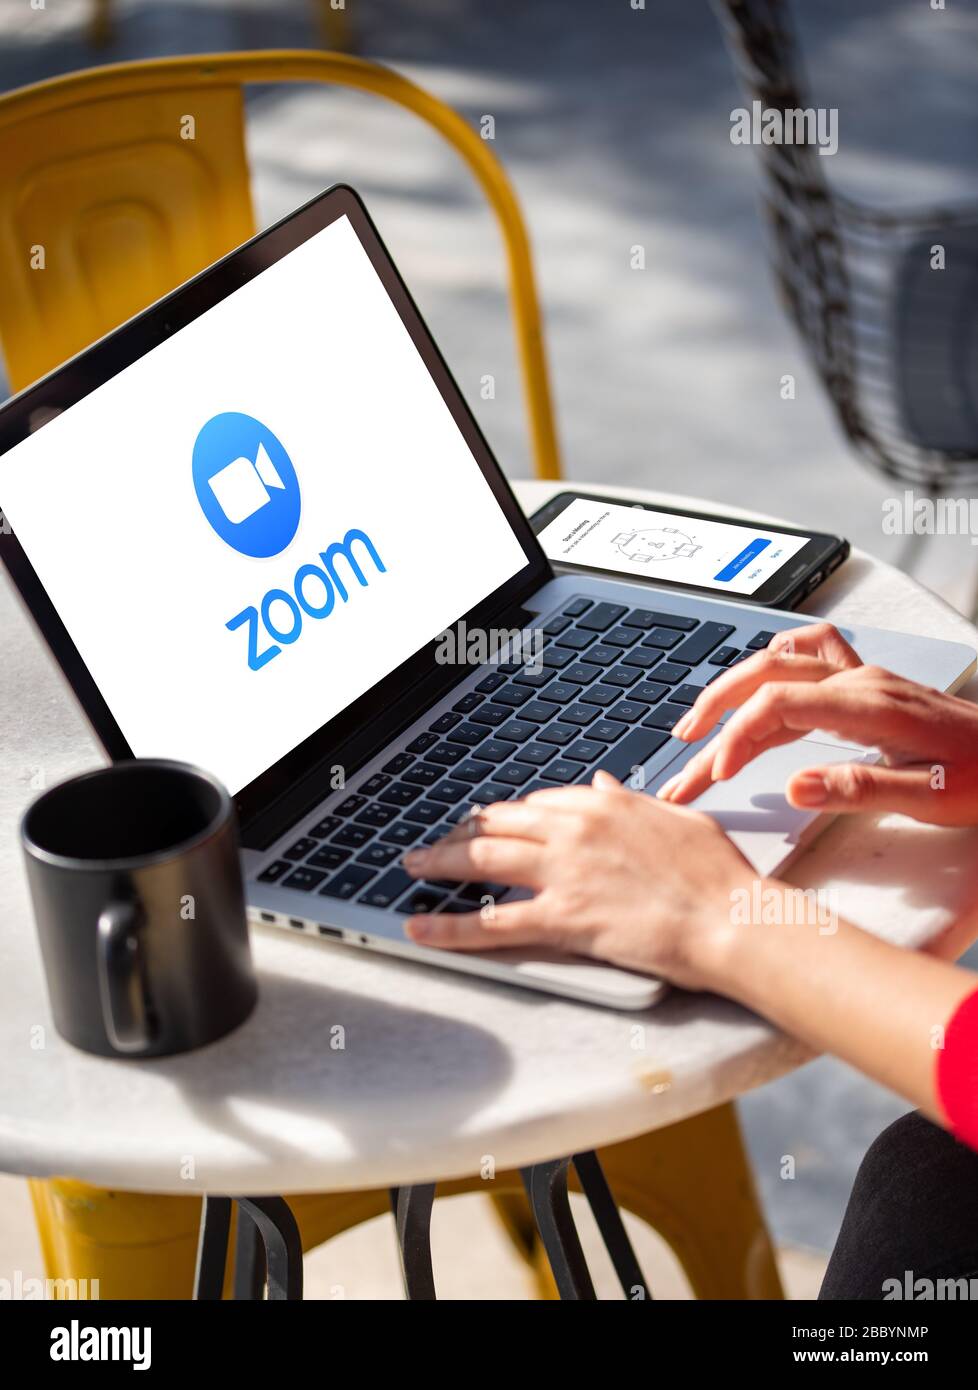 Antalya, TÜRKEI - 30. März 2020. Laptop und Mobiltelefon mit dem Logo der App "Zoom Cloud Meetings". Stockfoto